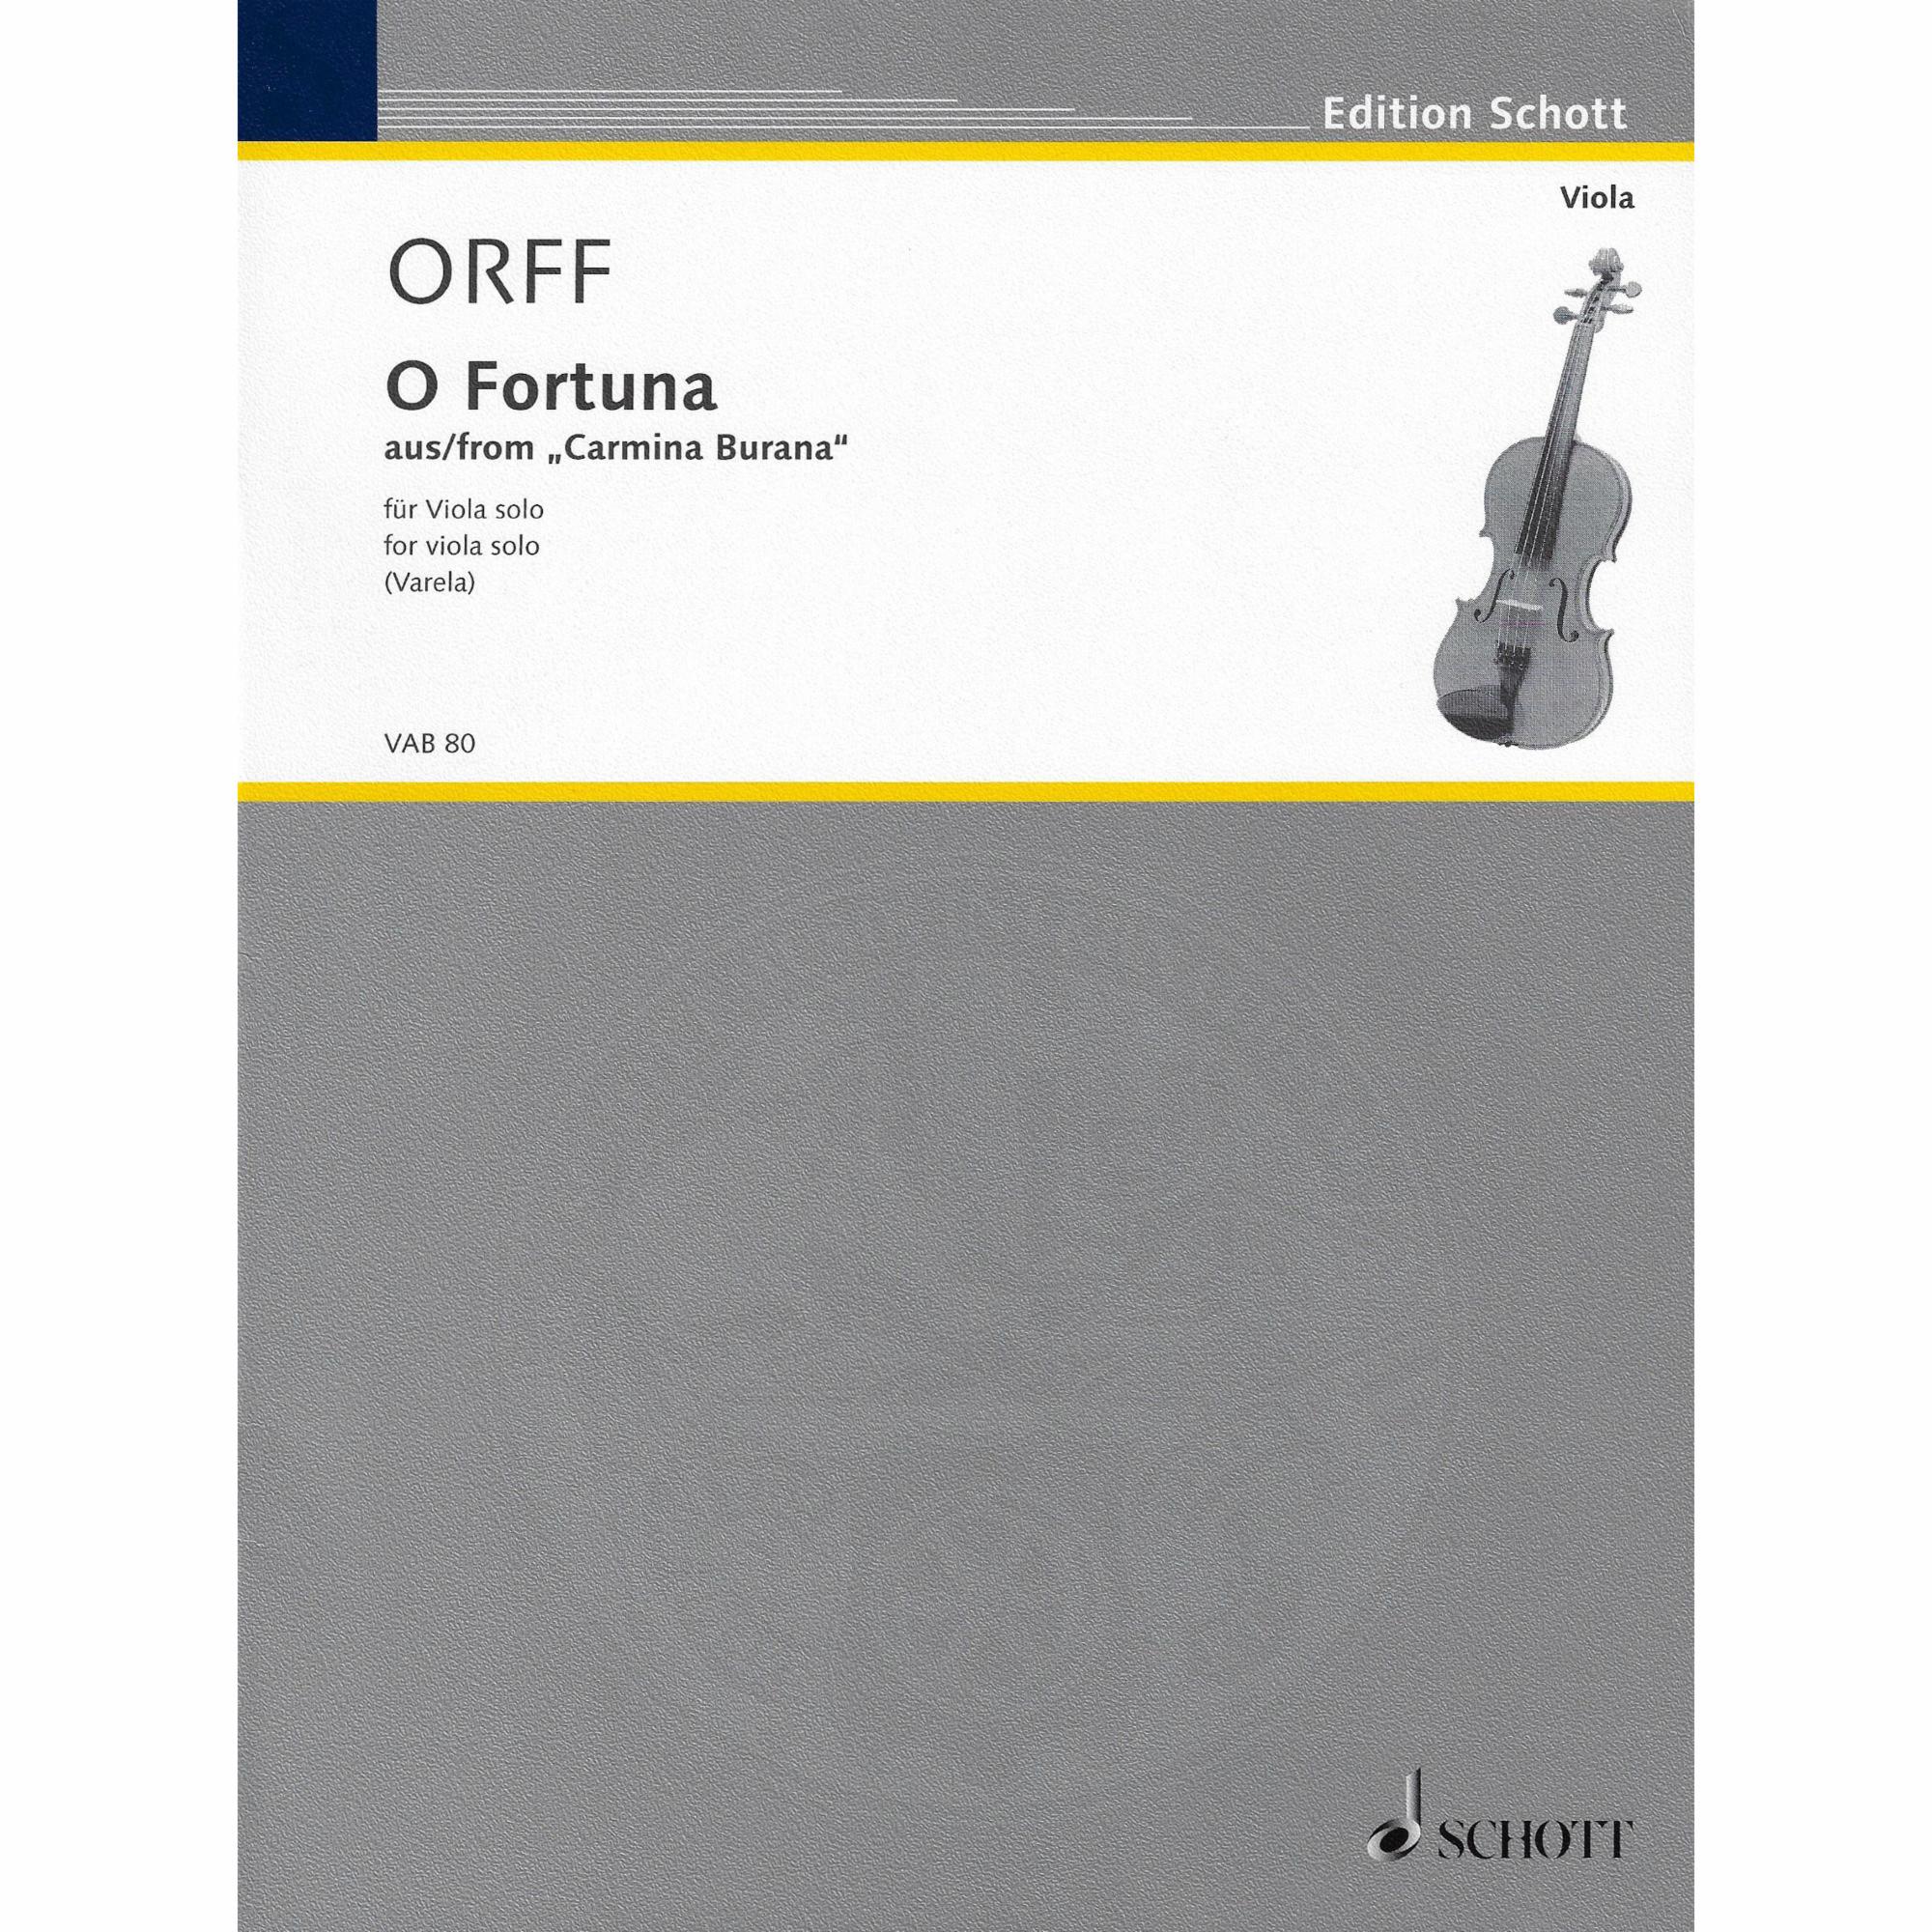 Orff -- O Fortuna, from Carmina Burana for Solo Viola